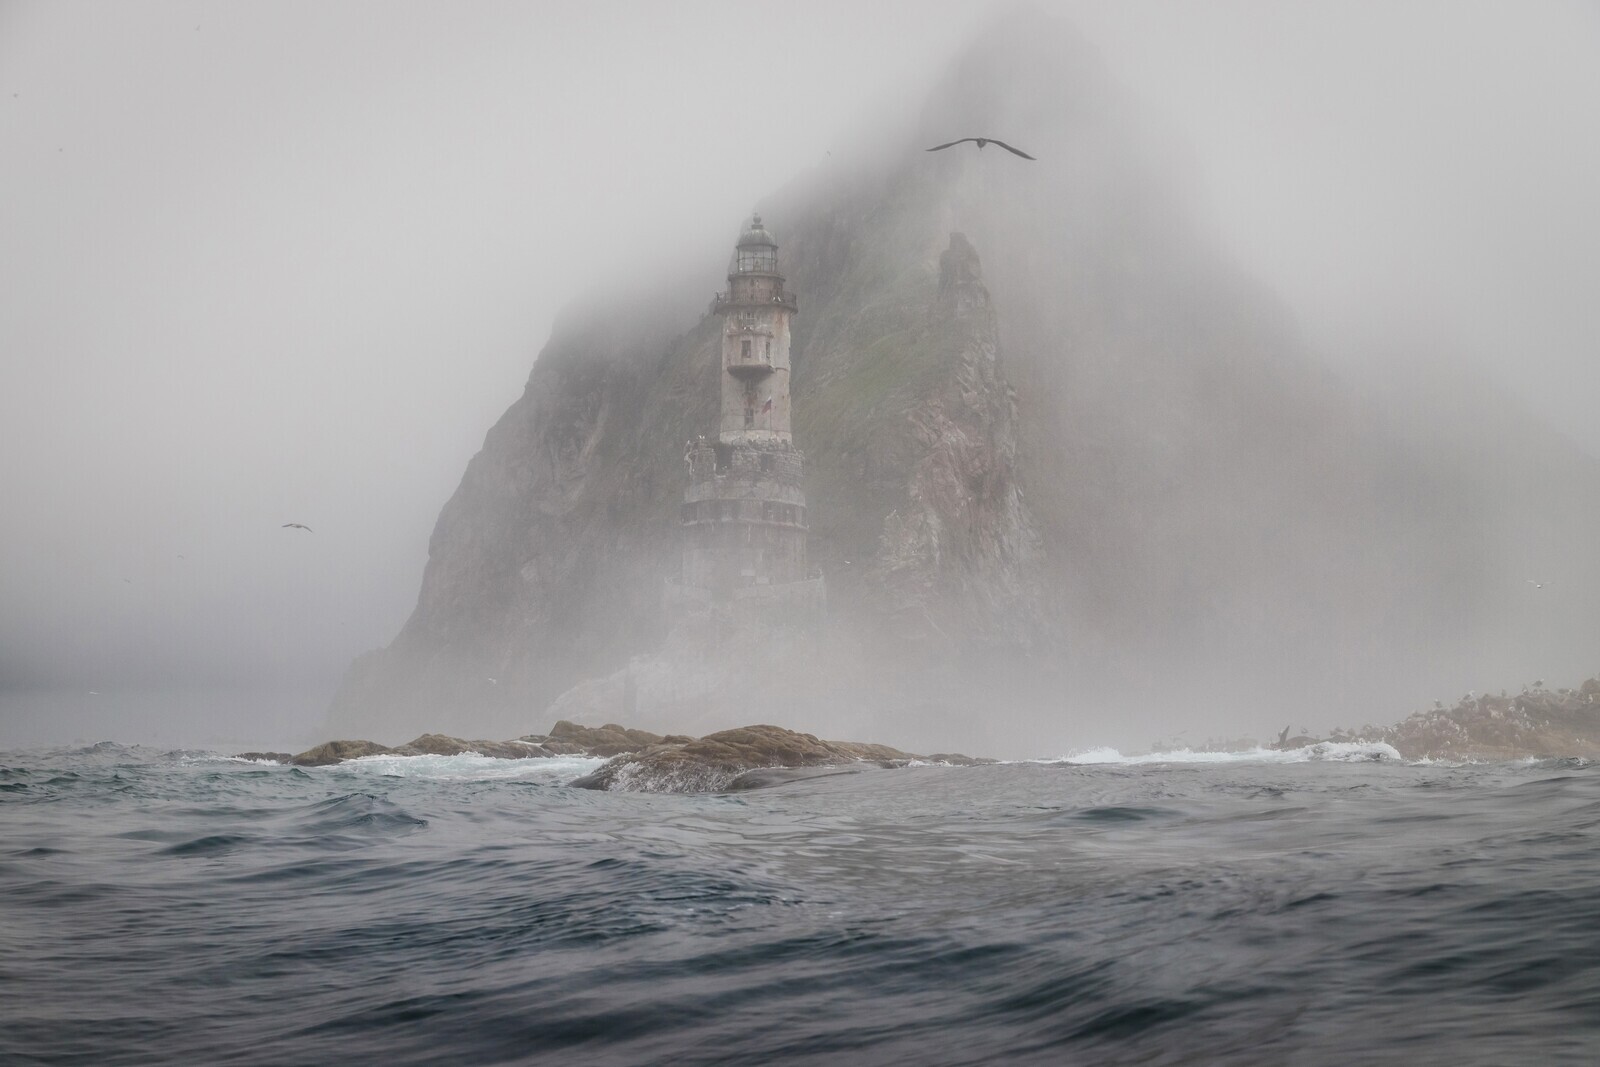 Финалист в номинации Пейзаж, 2021. Заброшенный маяк Анива в тумане. Автор Александр Усик